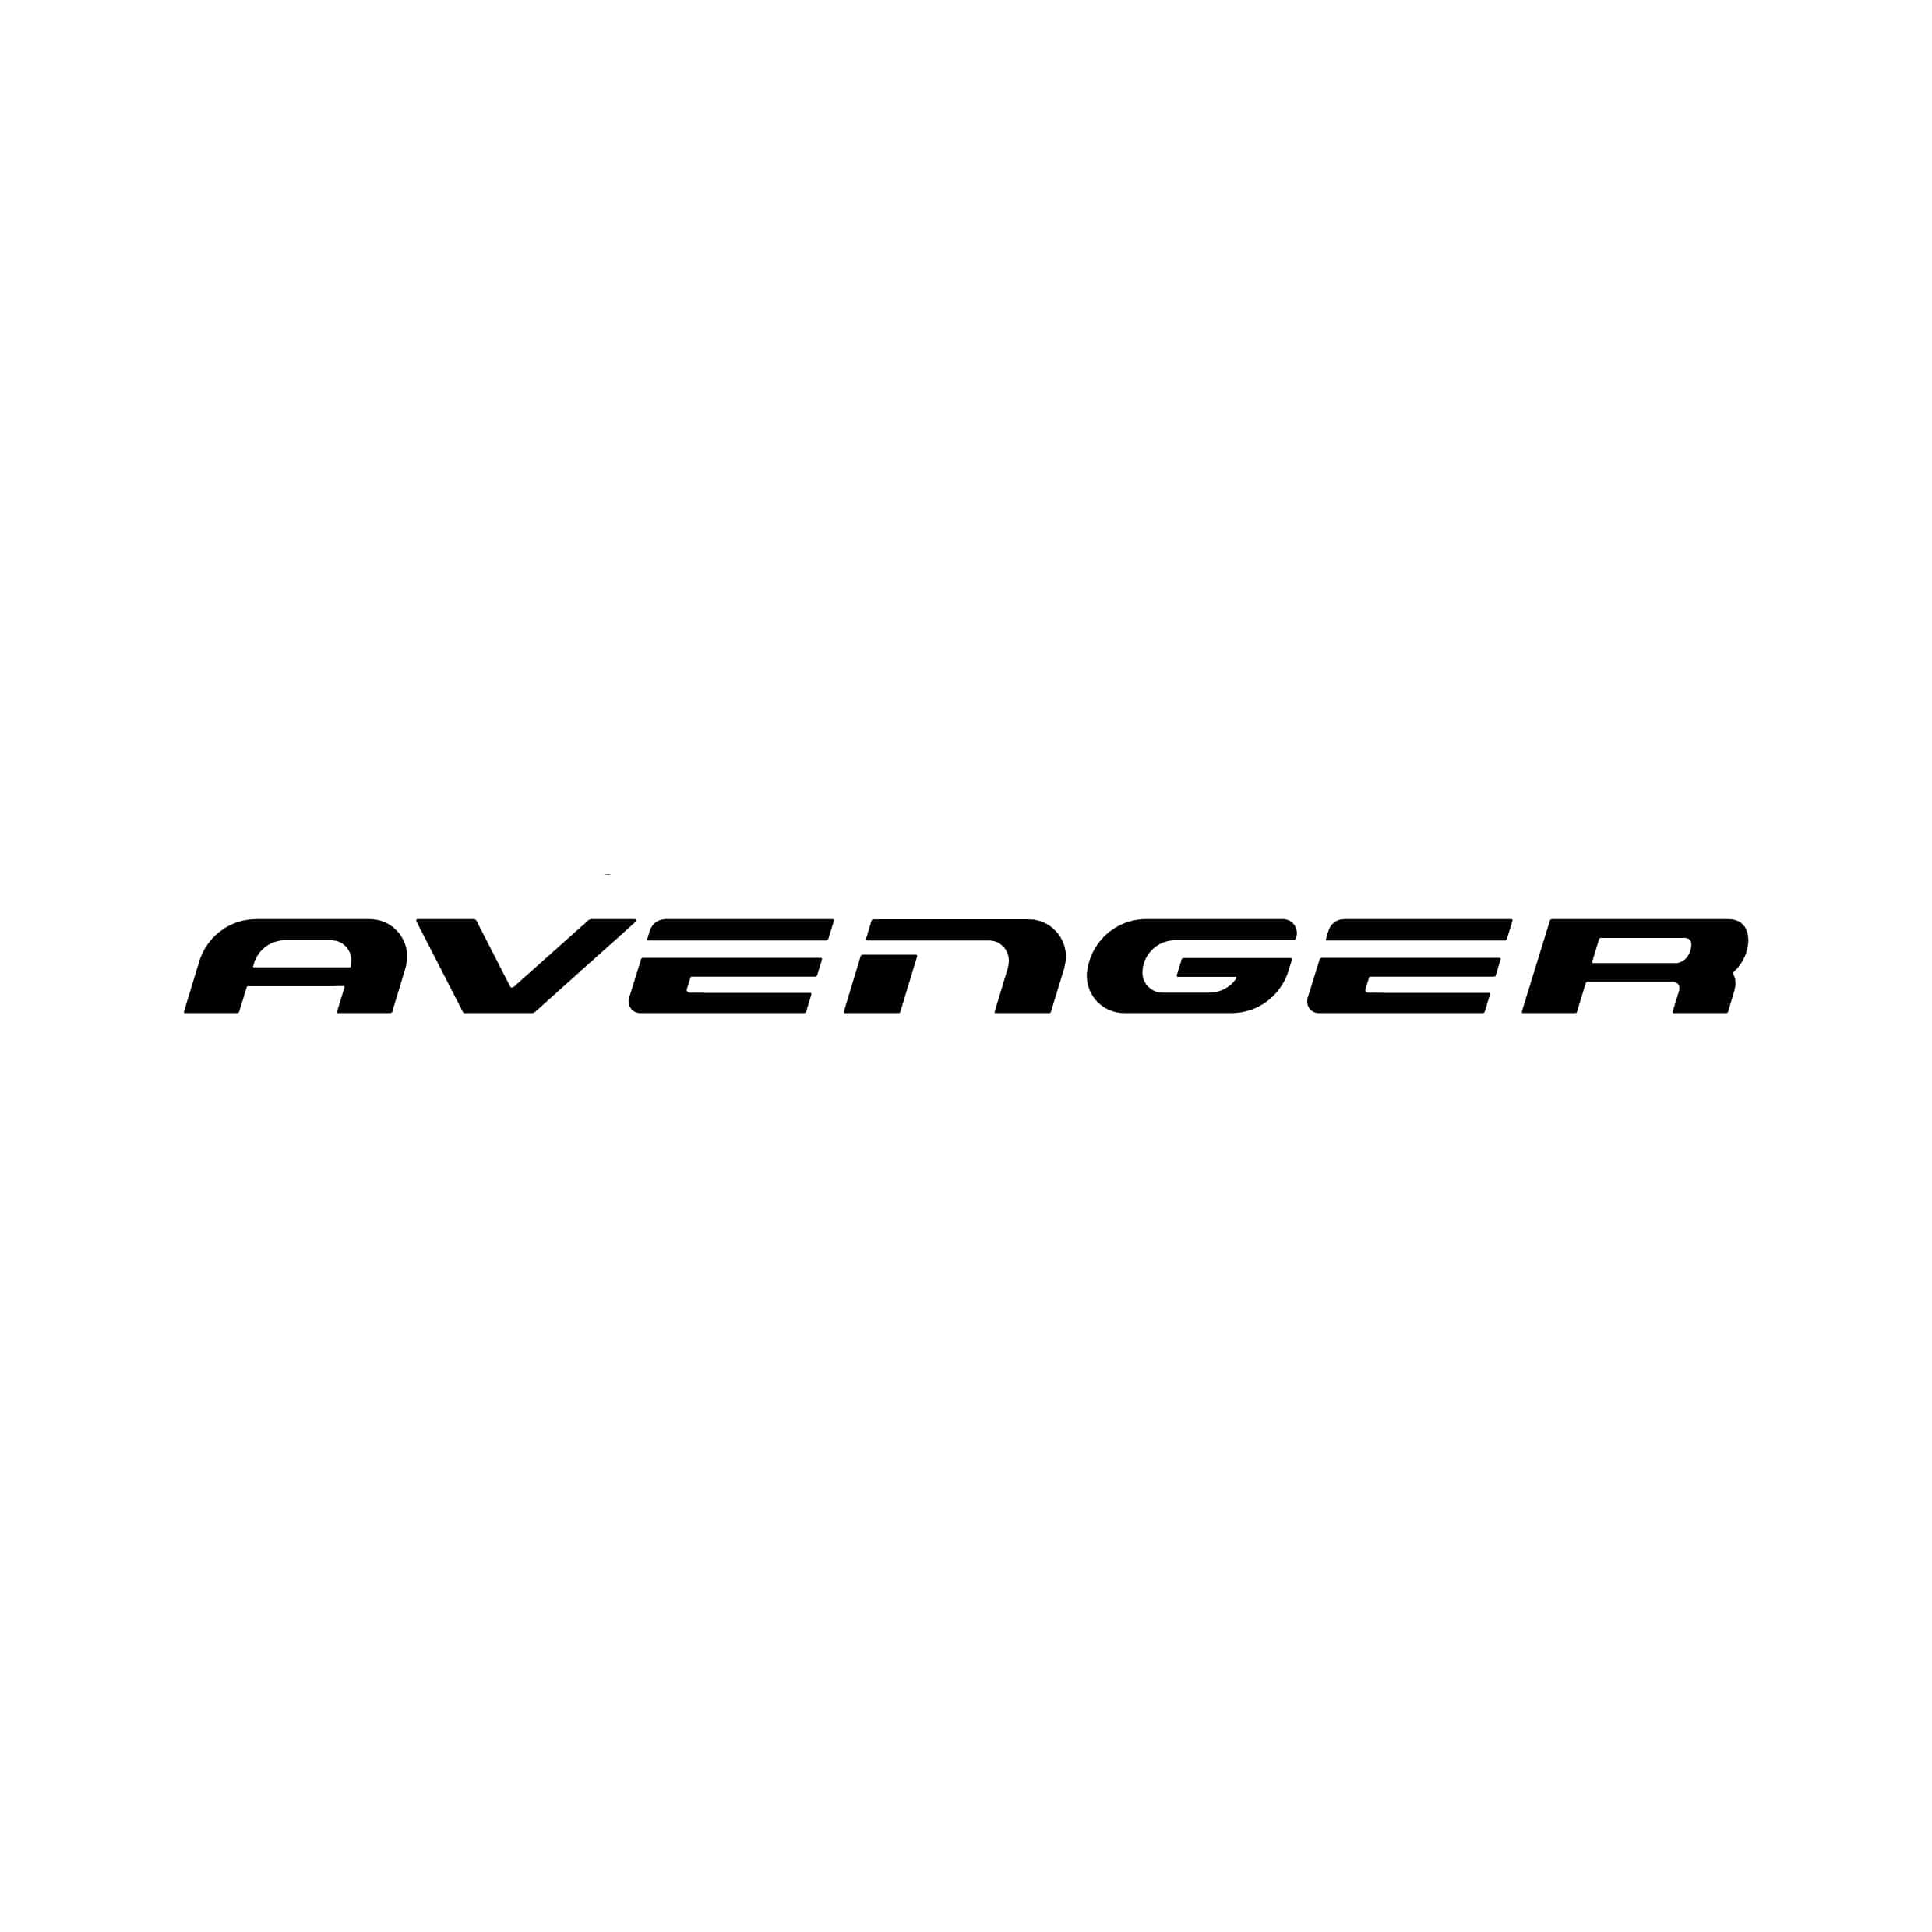 stickers-chrysler-avenger-ref31-autocollant-voiture-sticker-auto-autocollants-decals-sponsors-racing-tuning-sport-logo-min